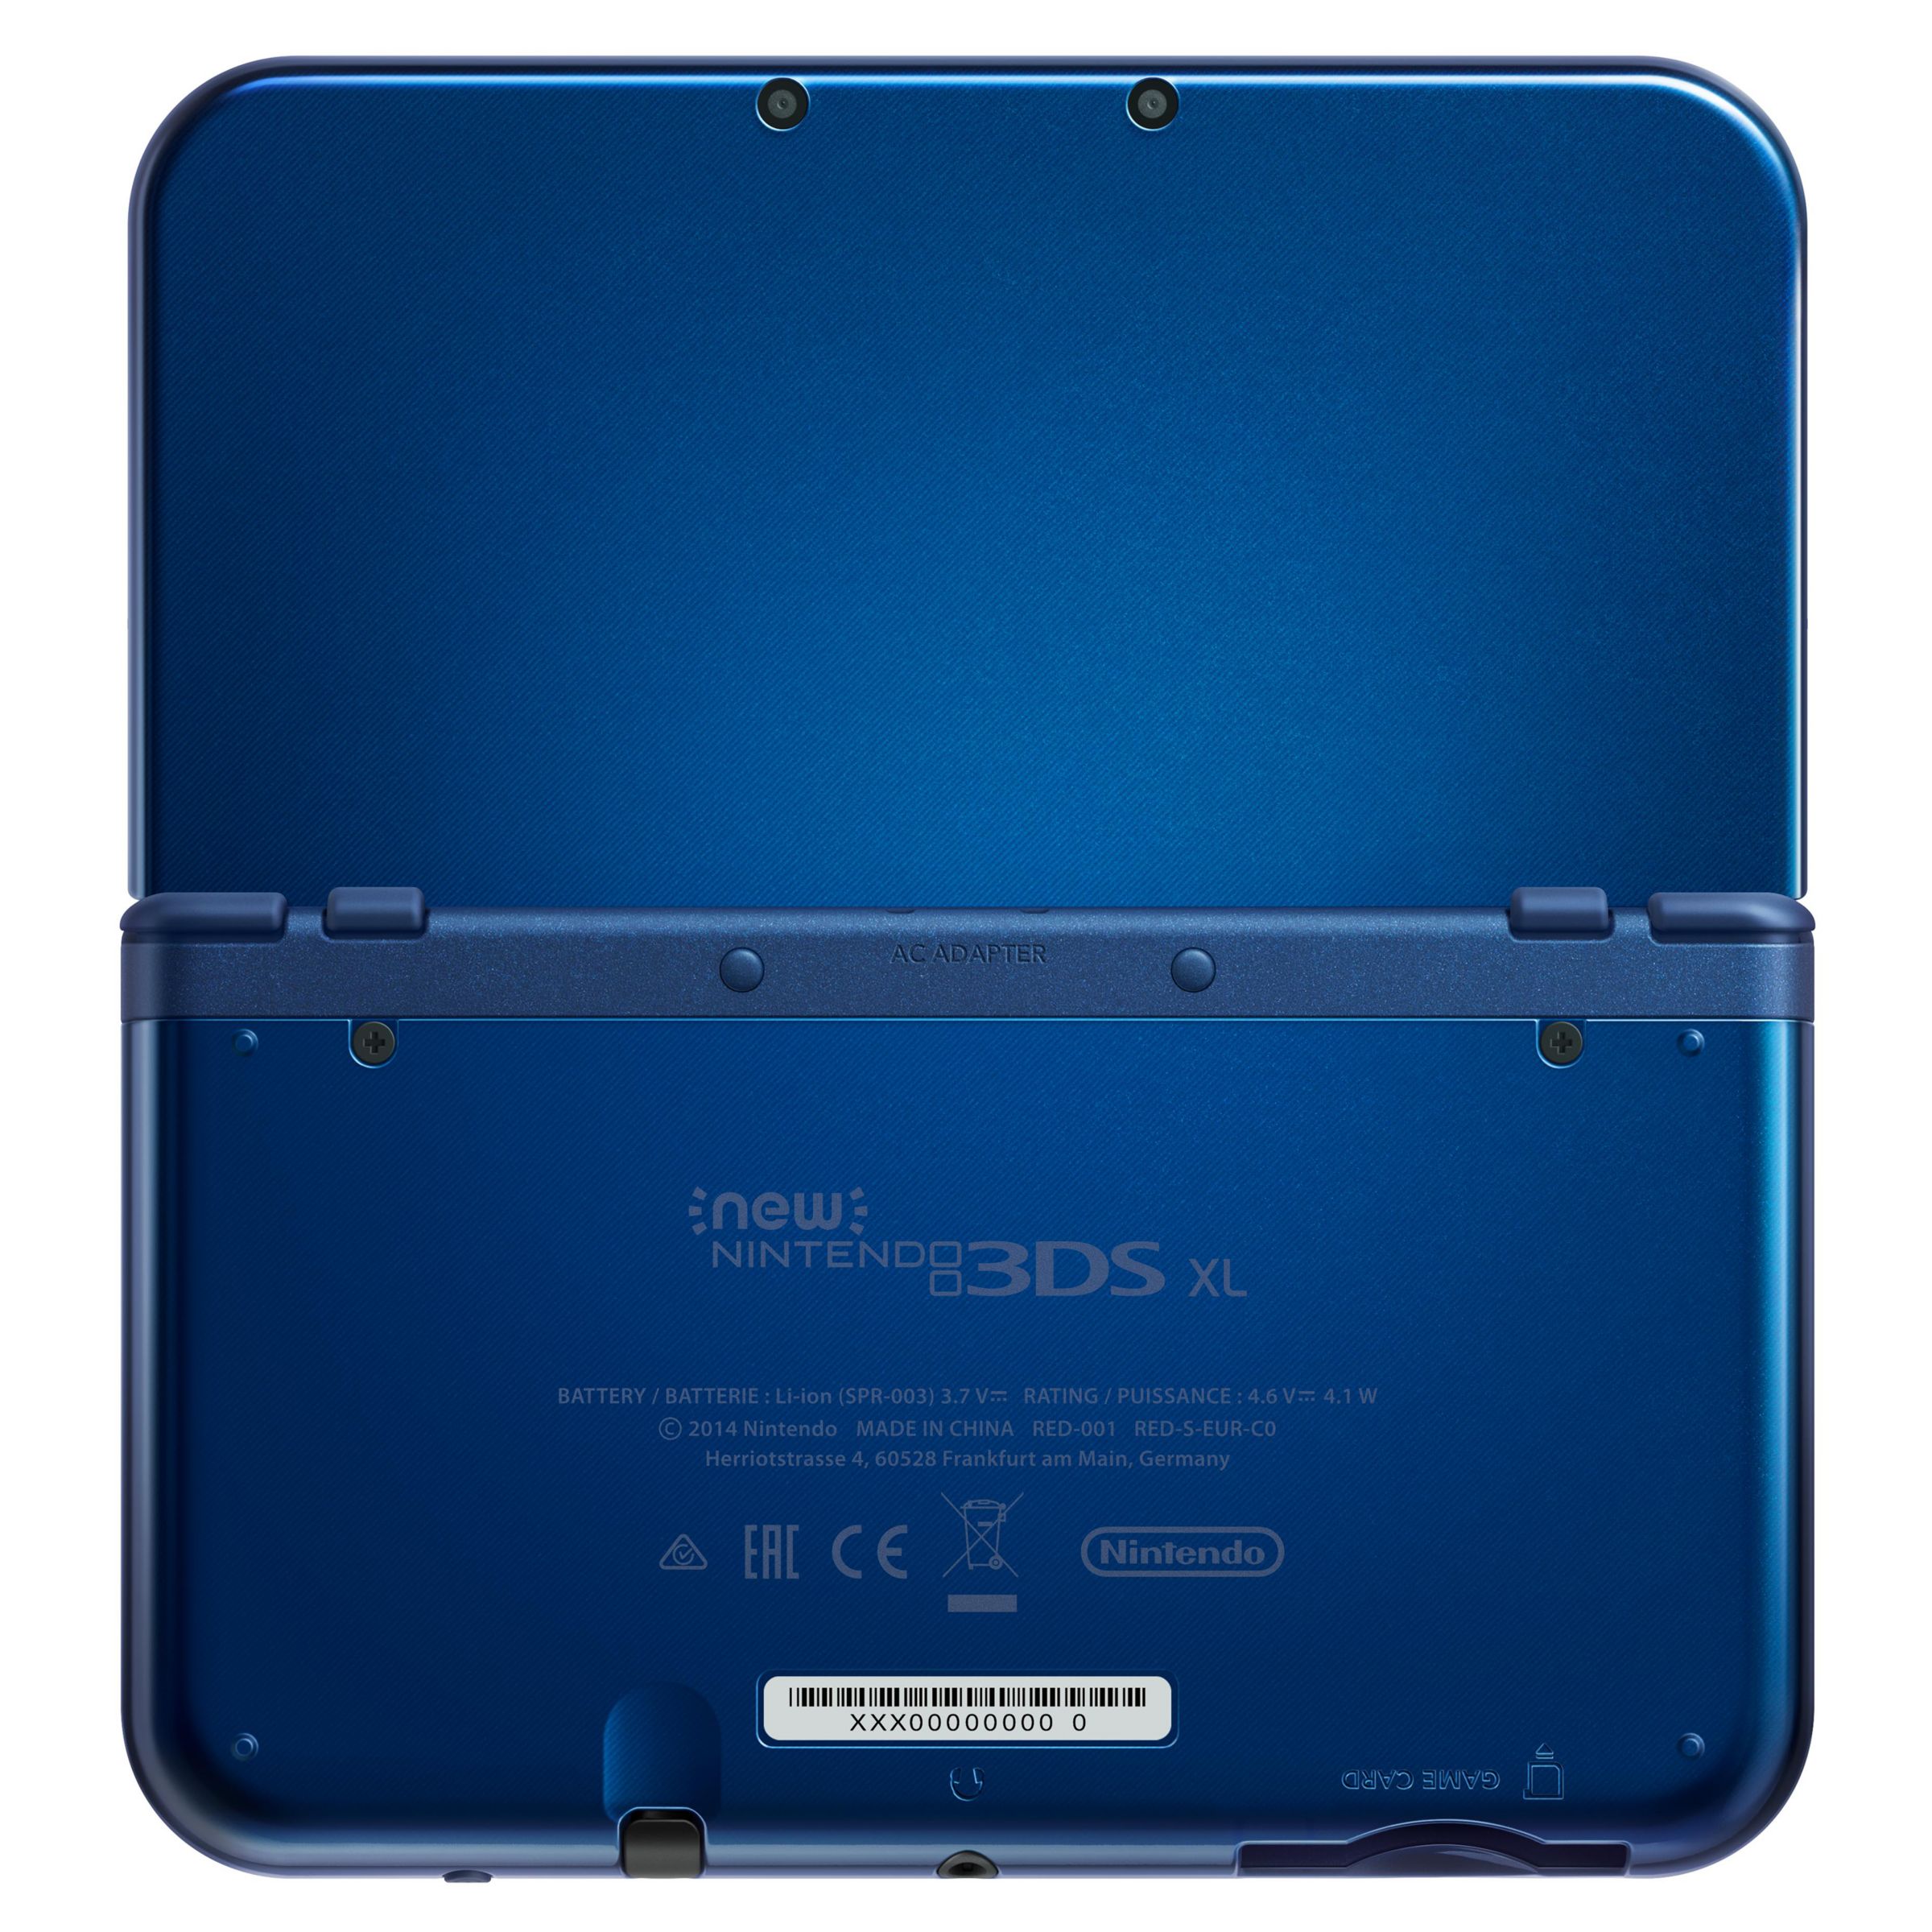 Nintendo 3ds Xl Metalic Blue At John Lewis Partners